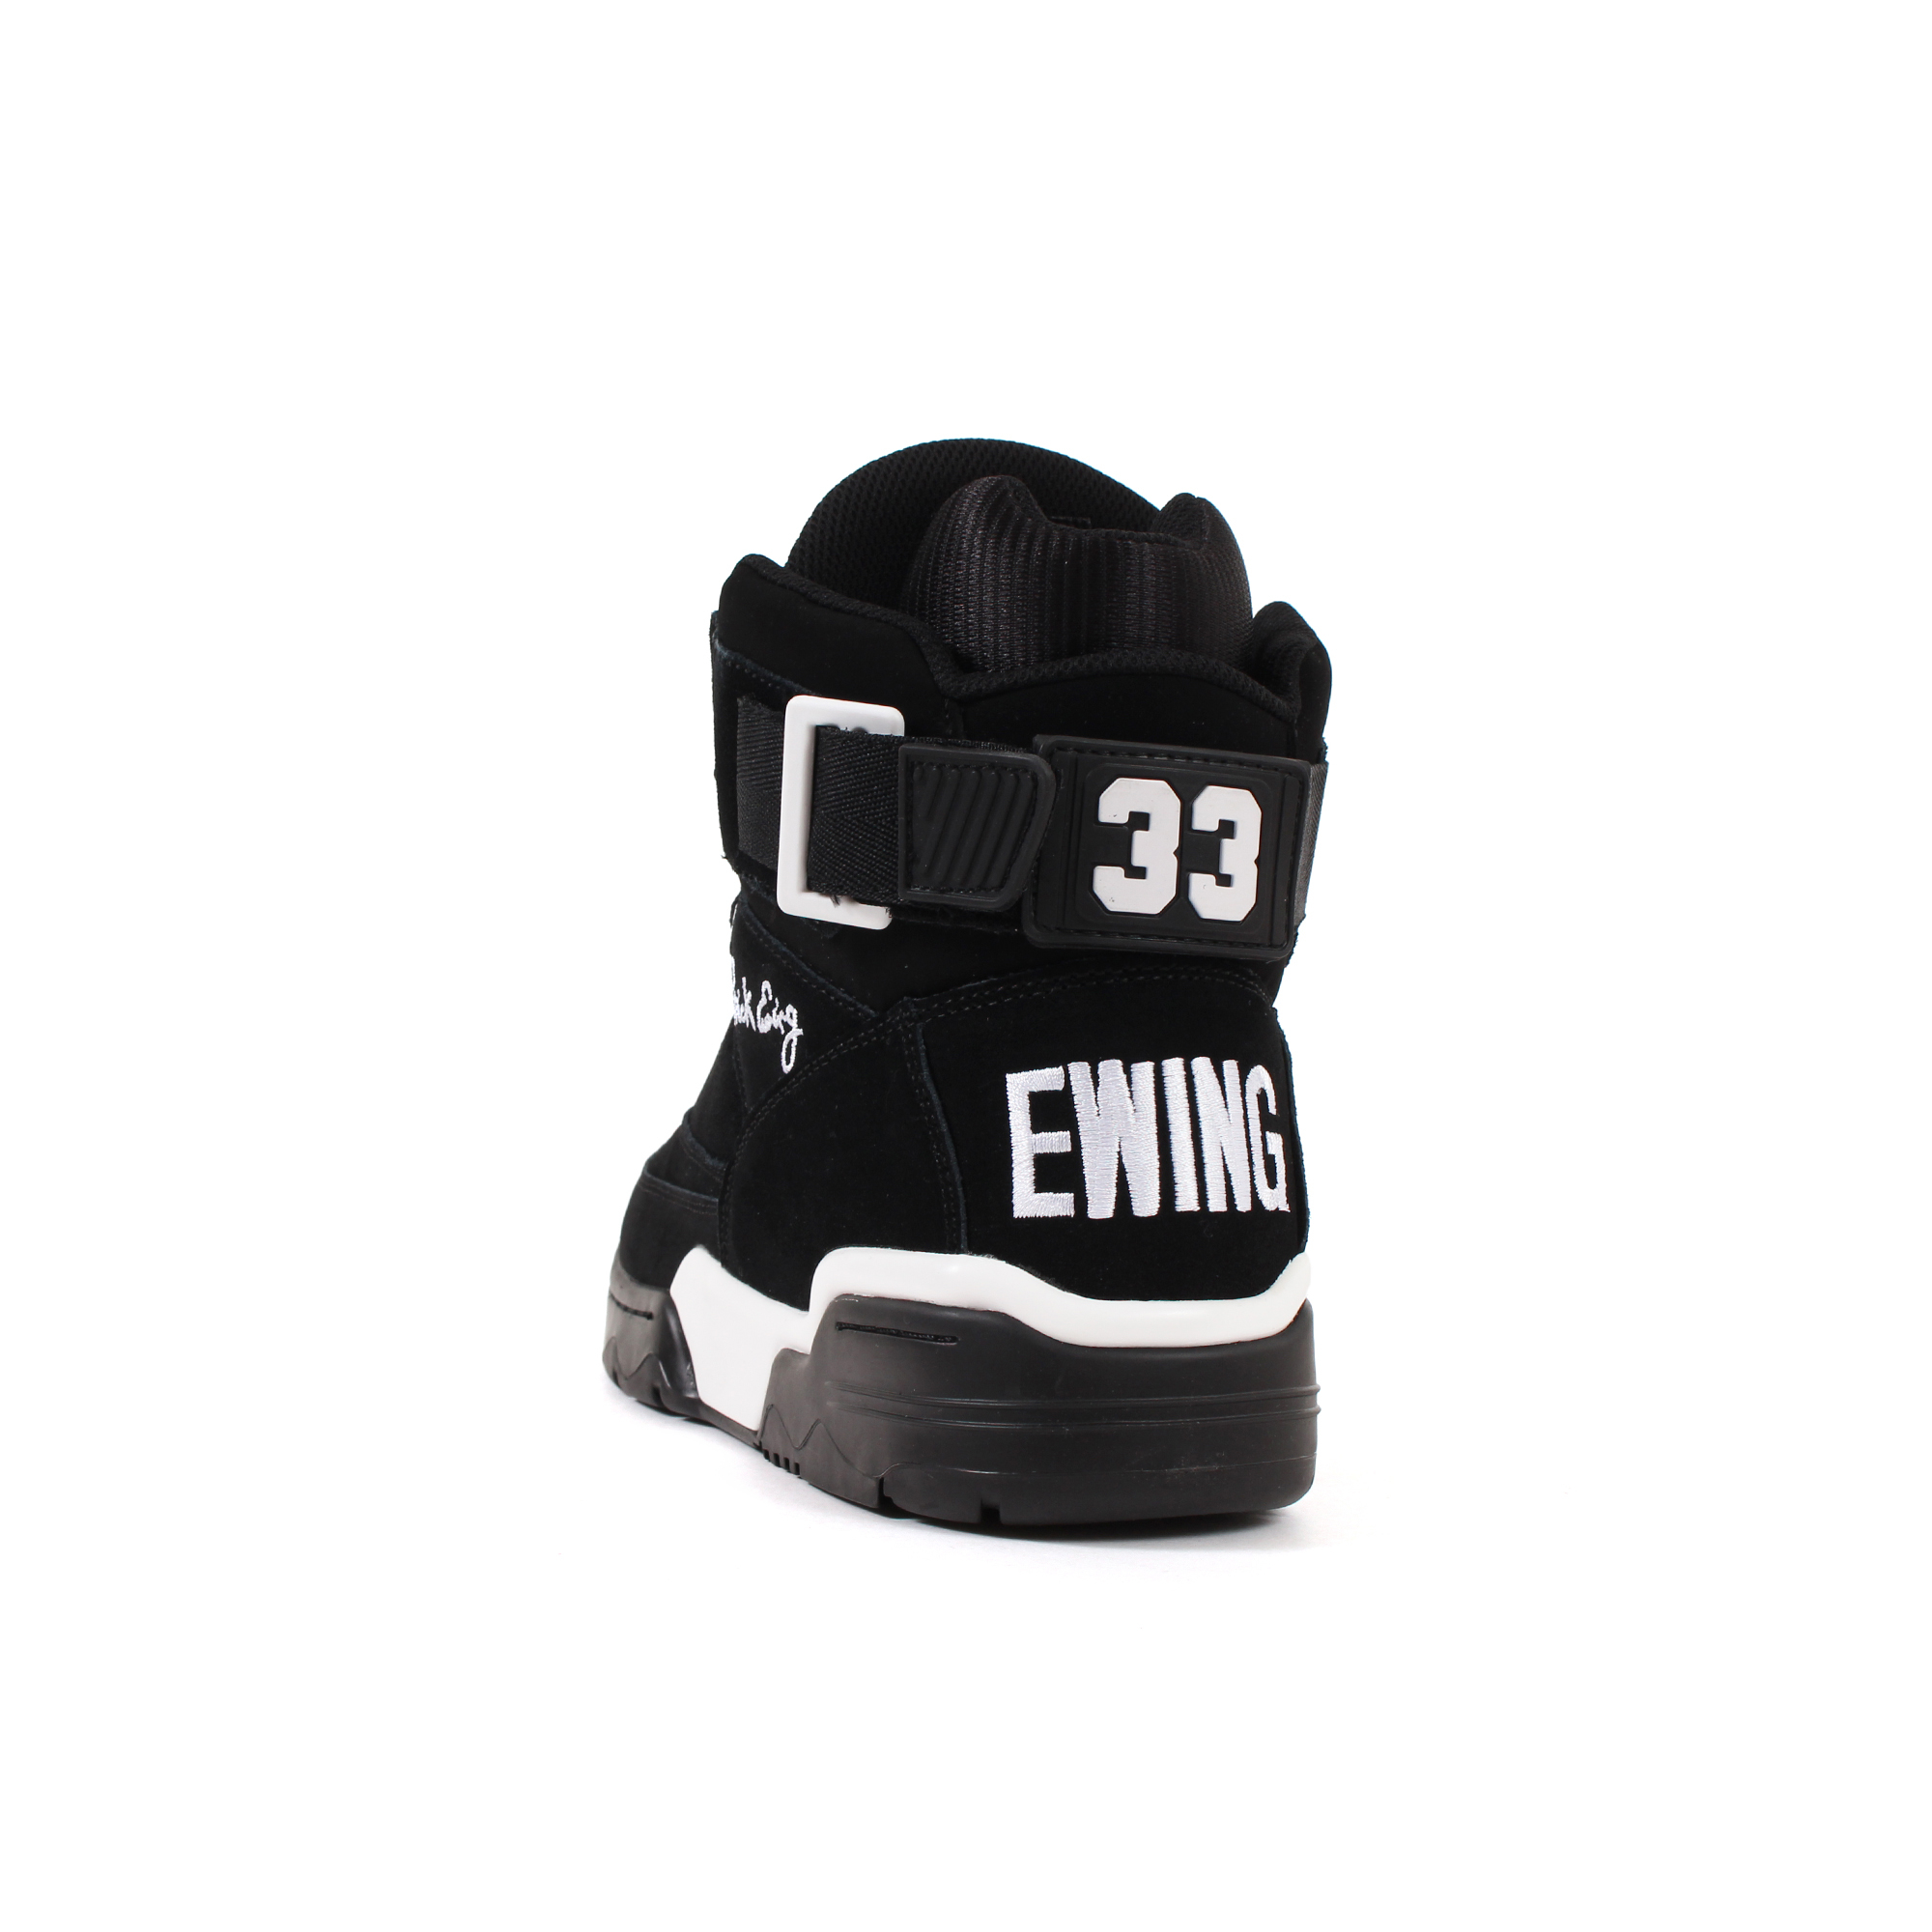 【B品】【28cm】Patrick Ewing 33 HI OG  スニーカー